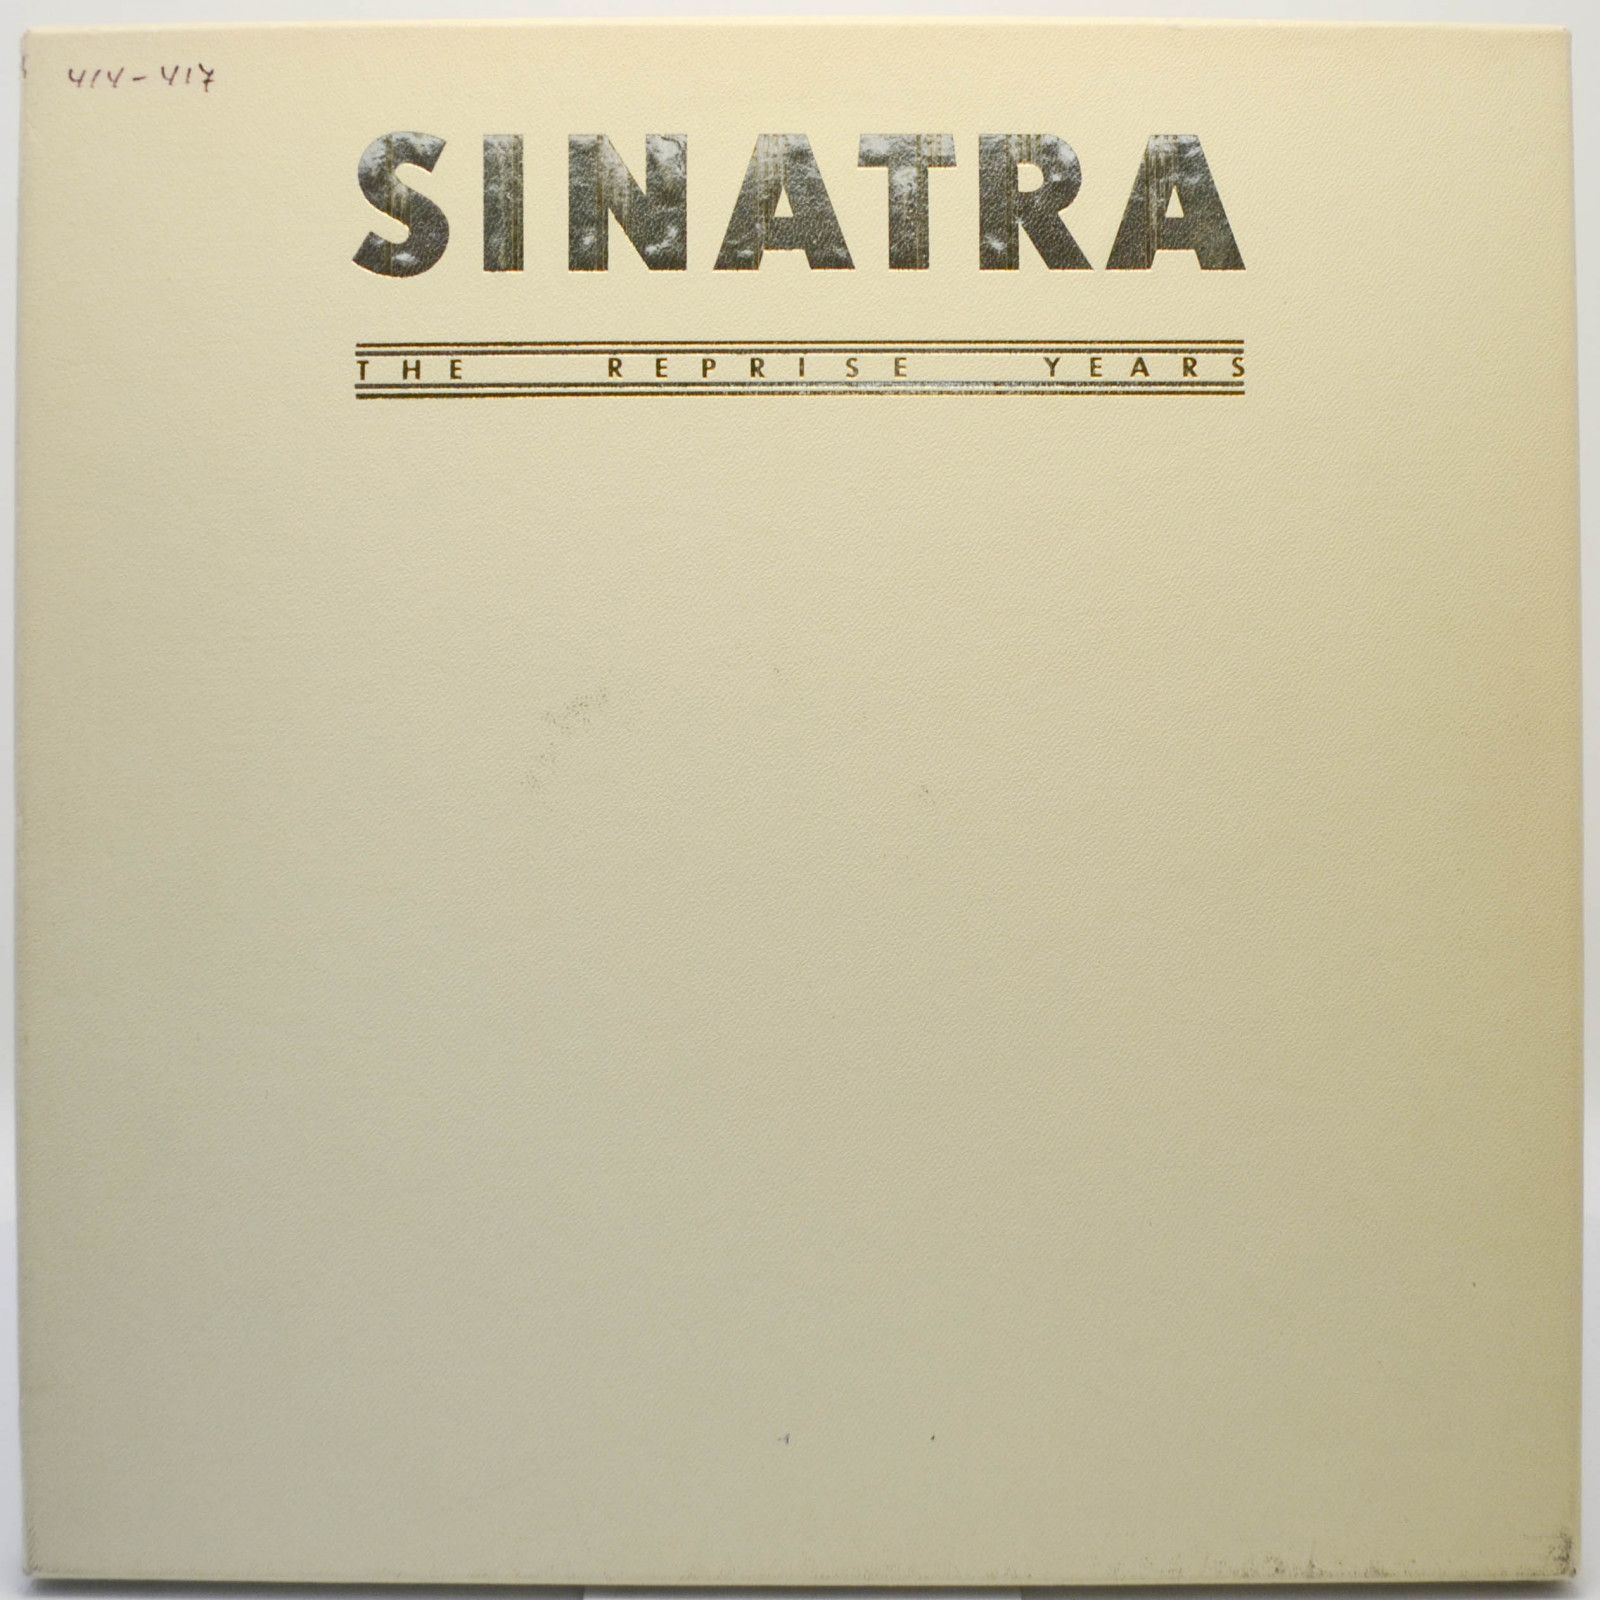 Frank Sinatra — Sinatra The Reprise Years (4LP, Box-set, booklet, UK), 1975